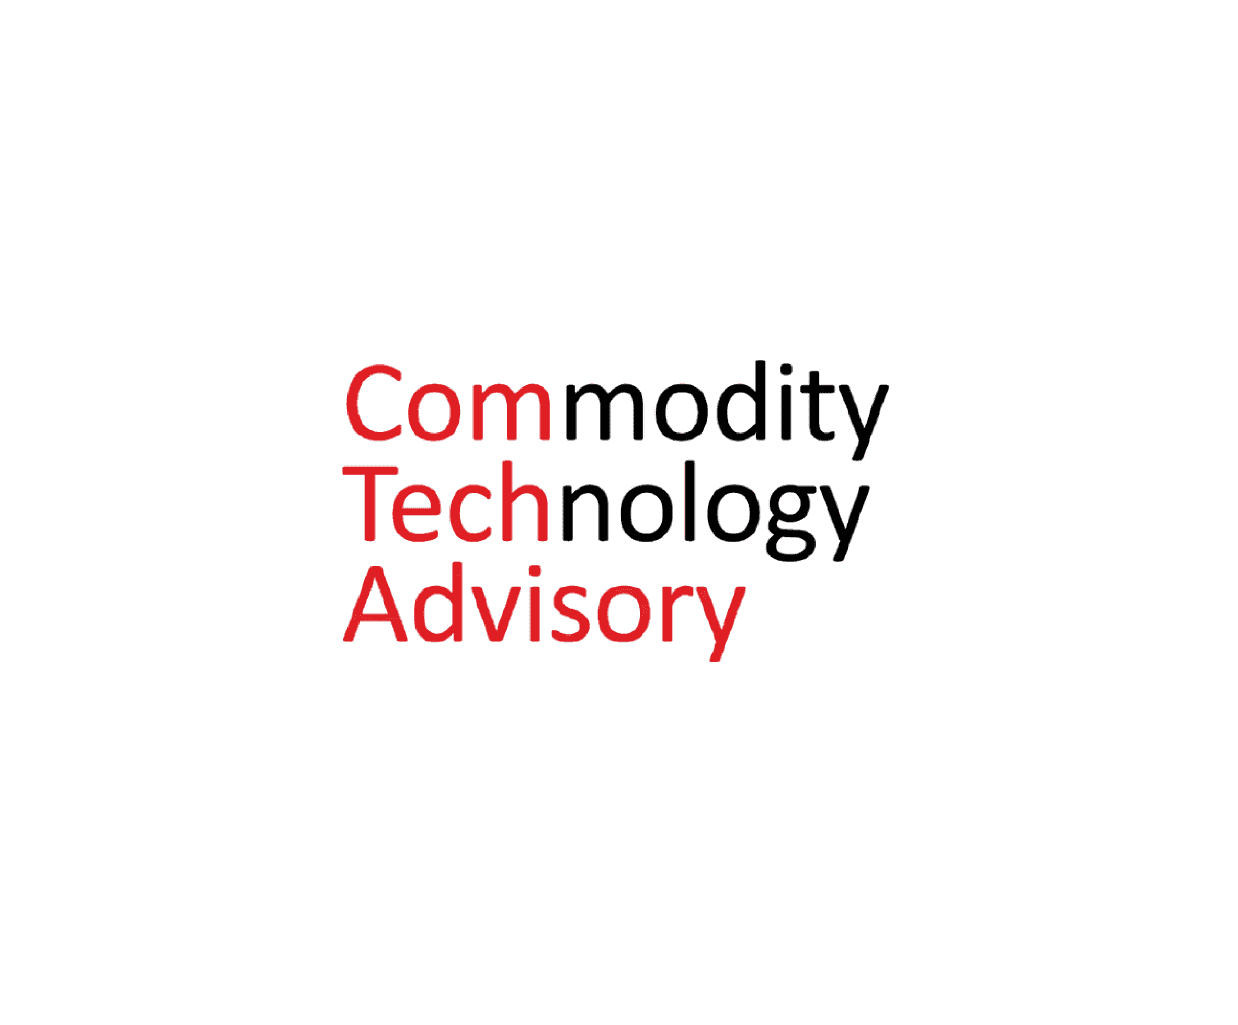 Commodity technology advisory